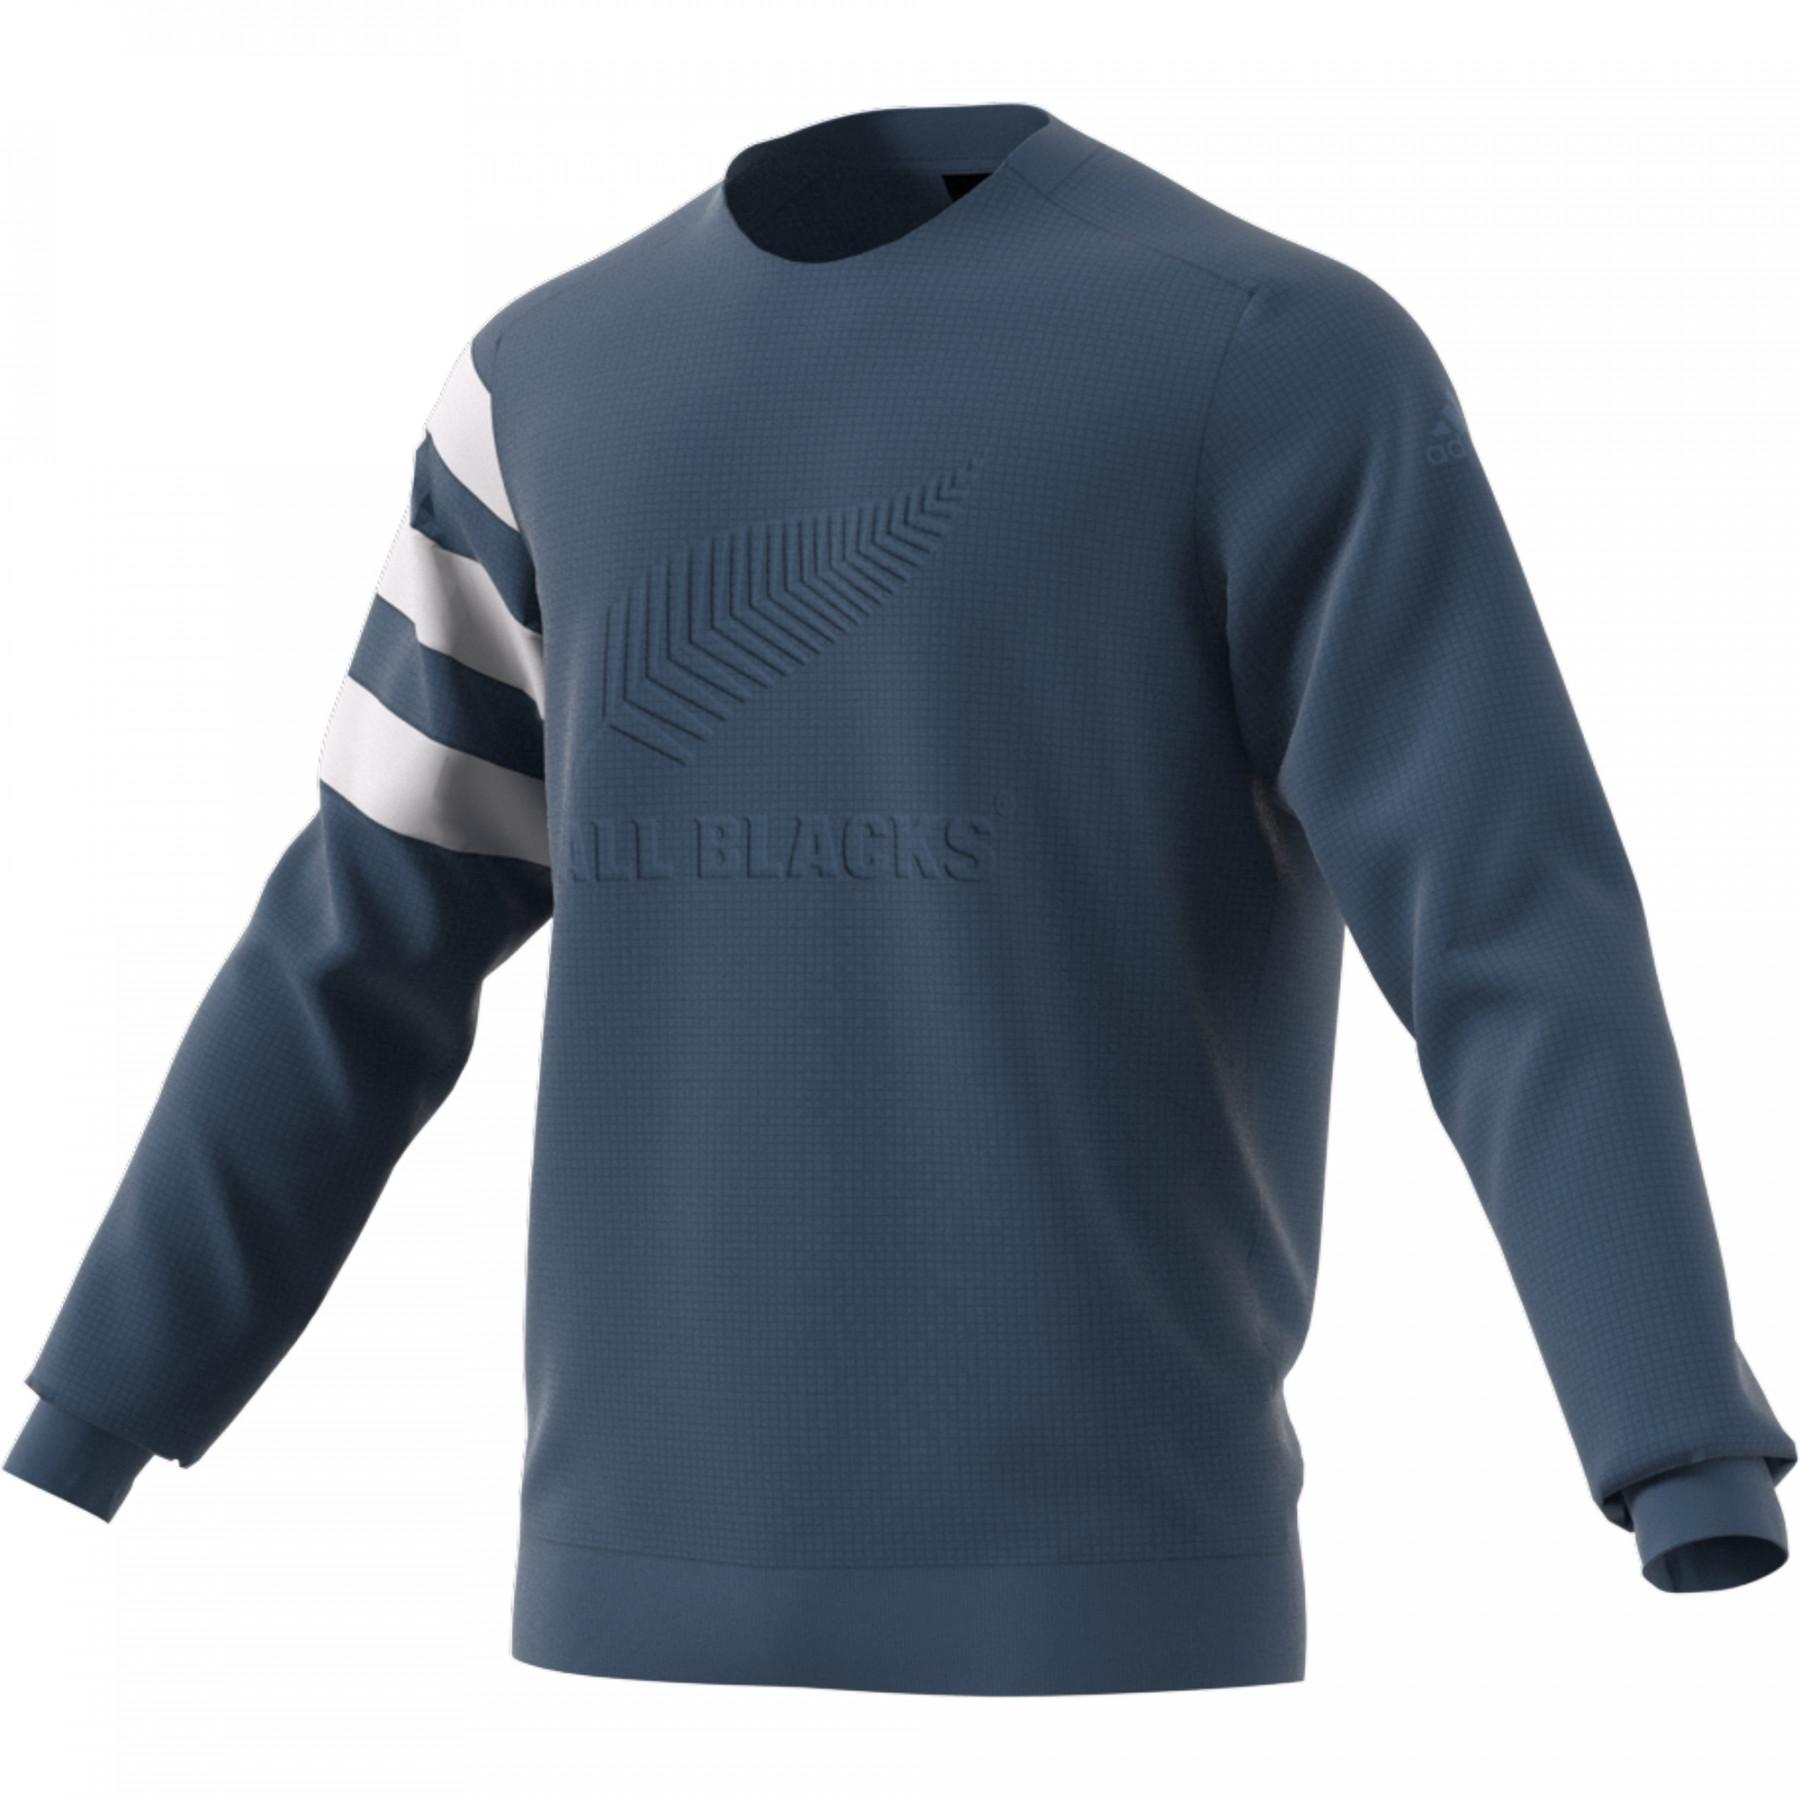 Round neck sweatshirt All Blacks 2020